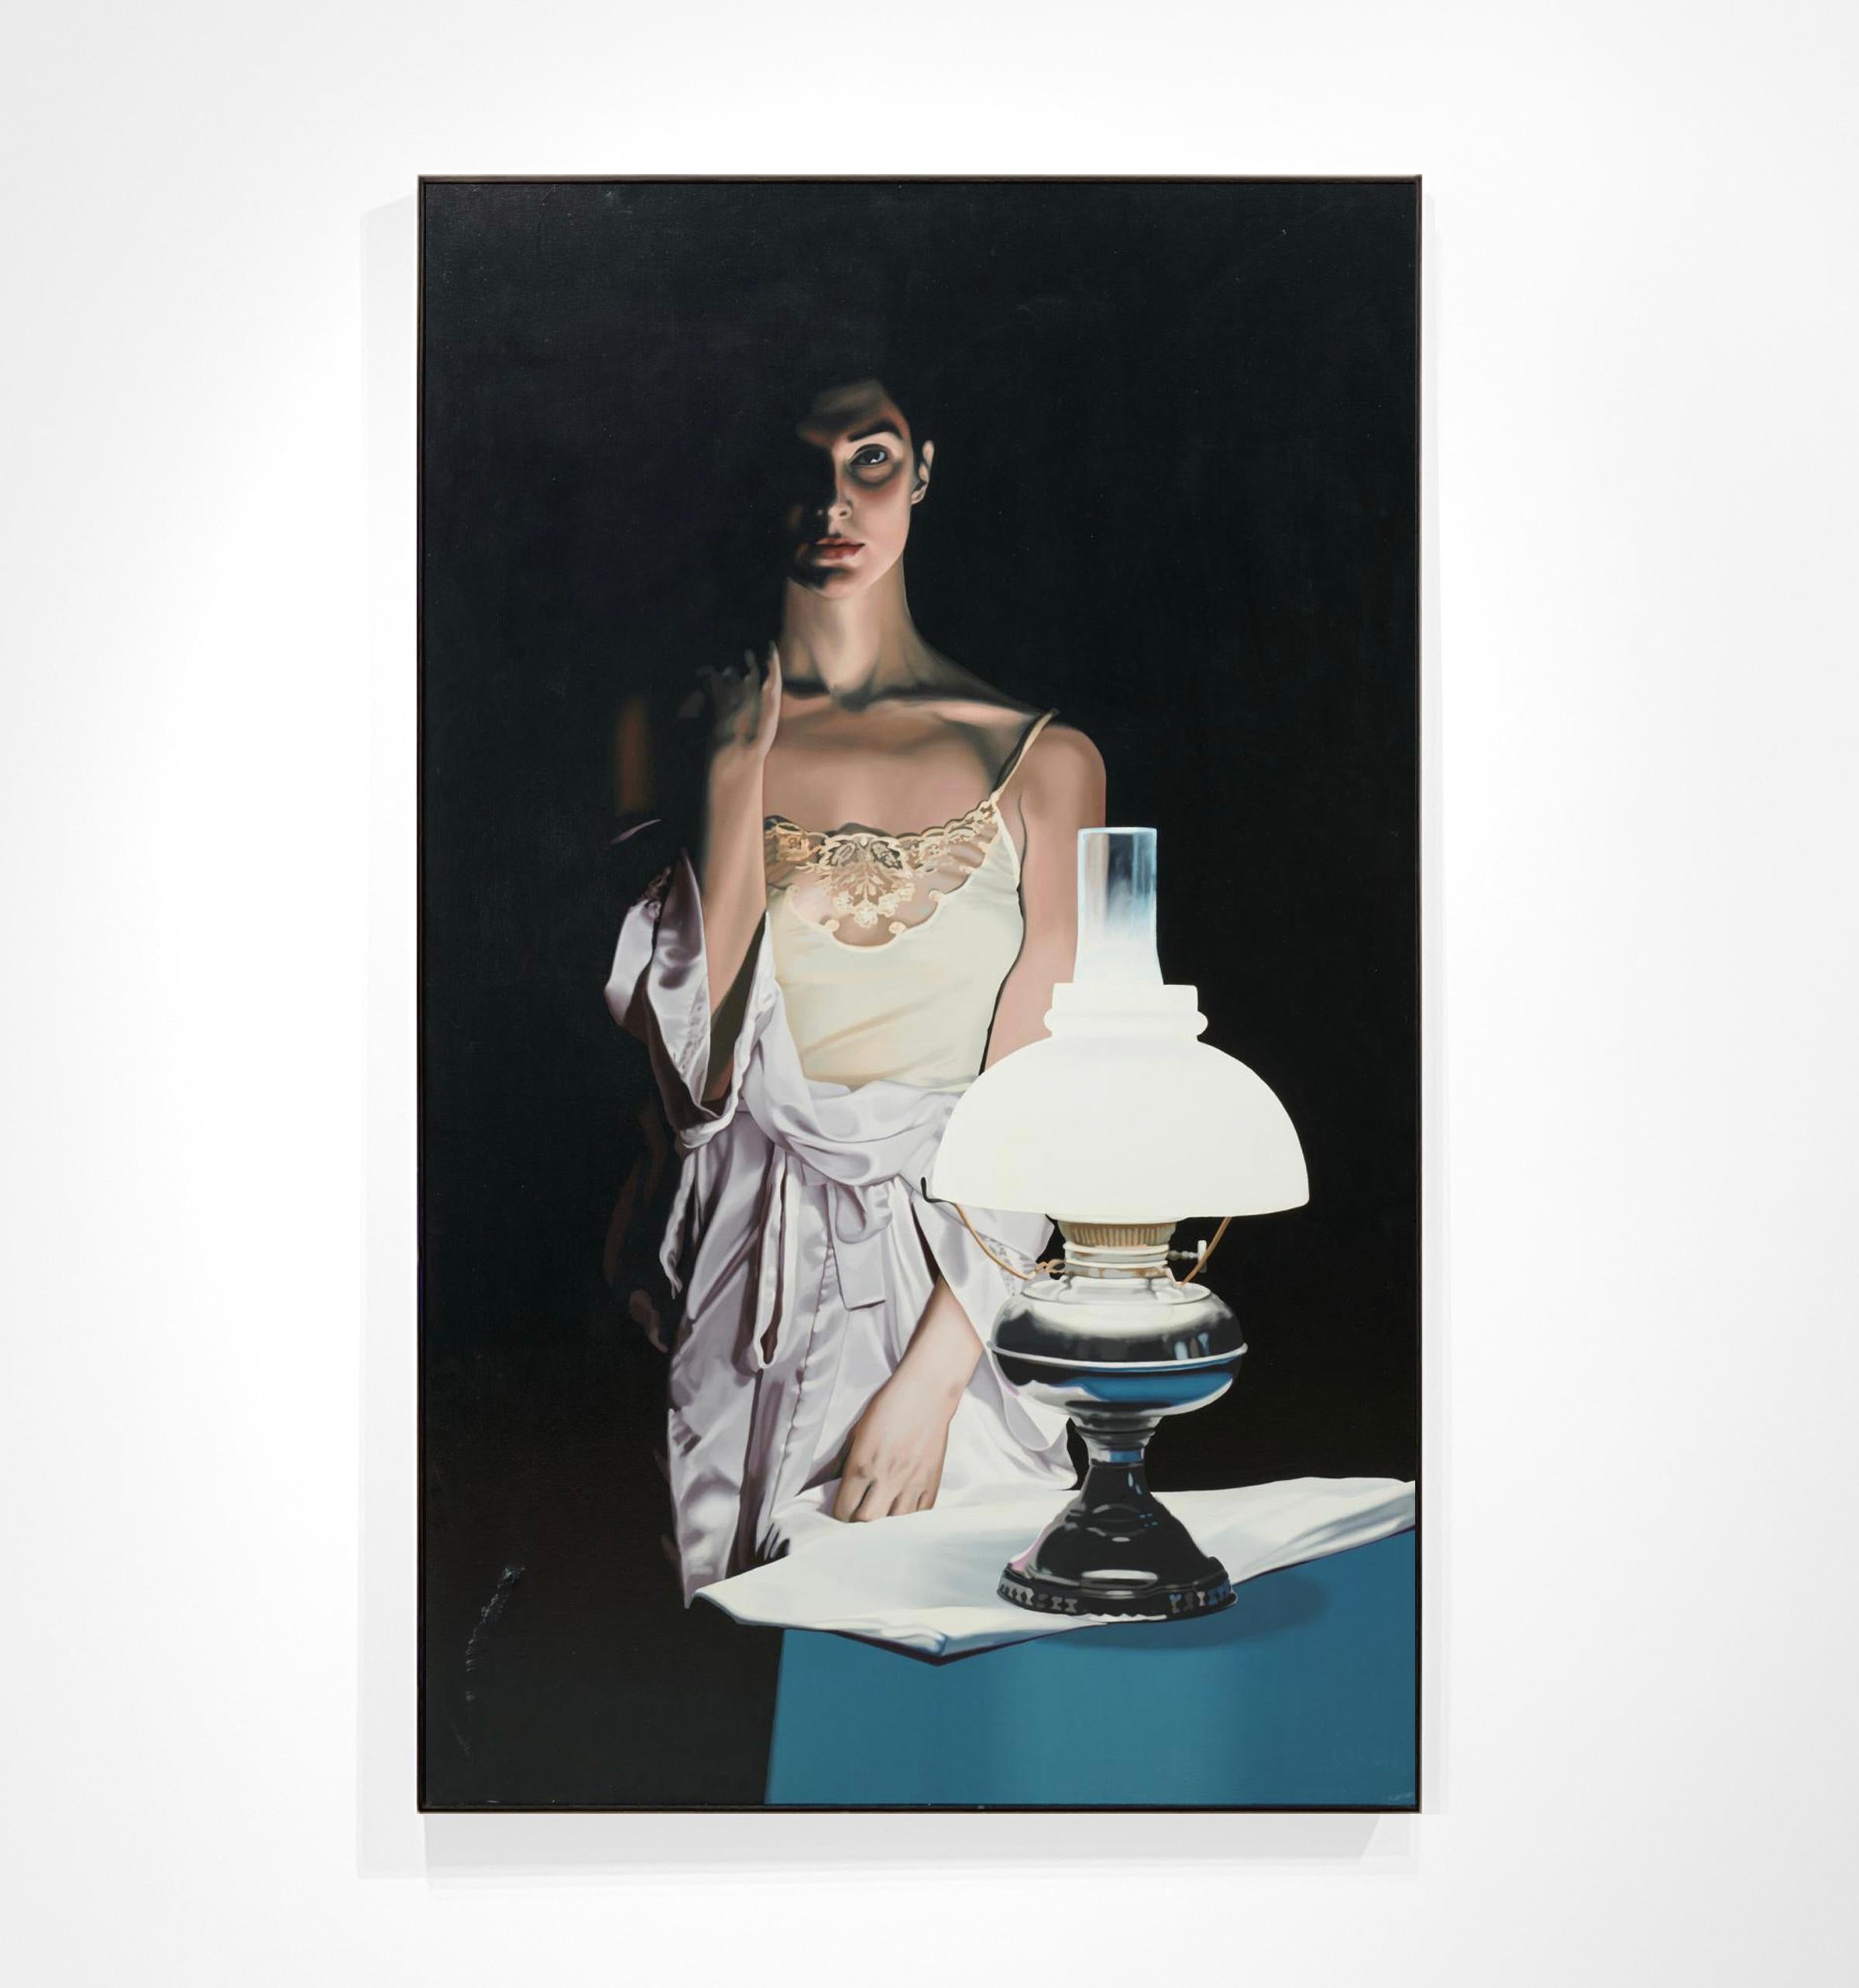 LAMP BLACK - Portrait / Dark colors / Female Figure / Photorealism / Blue / Lamp - Painting by Steve Smulka